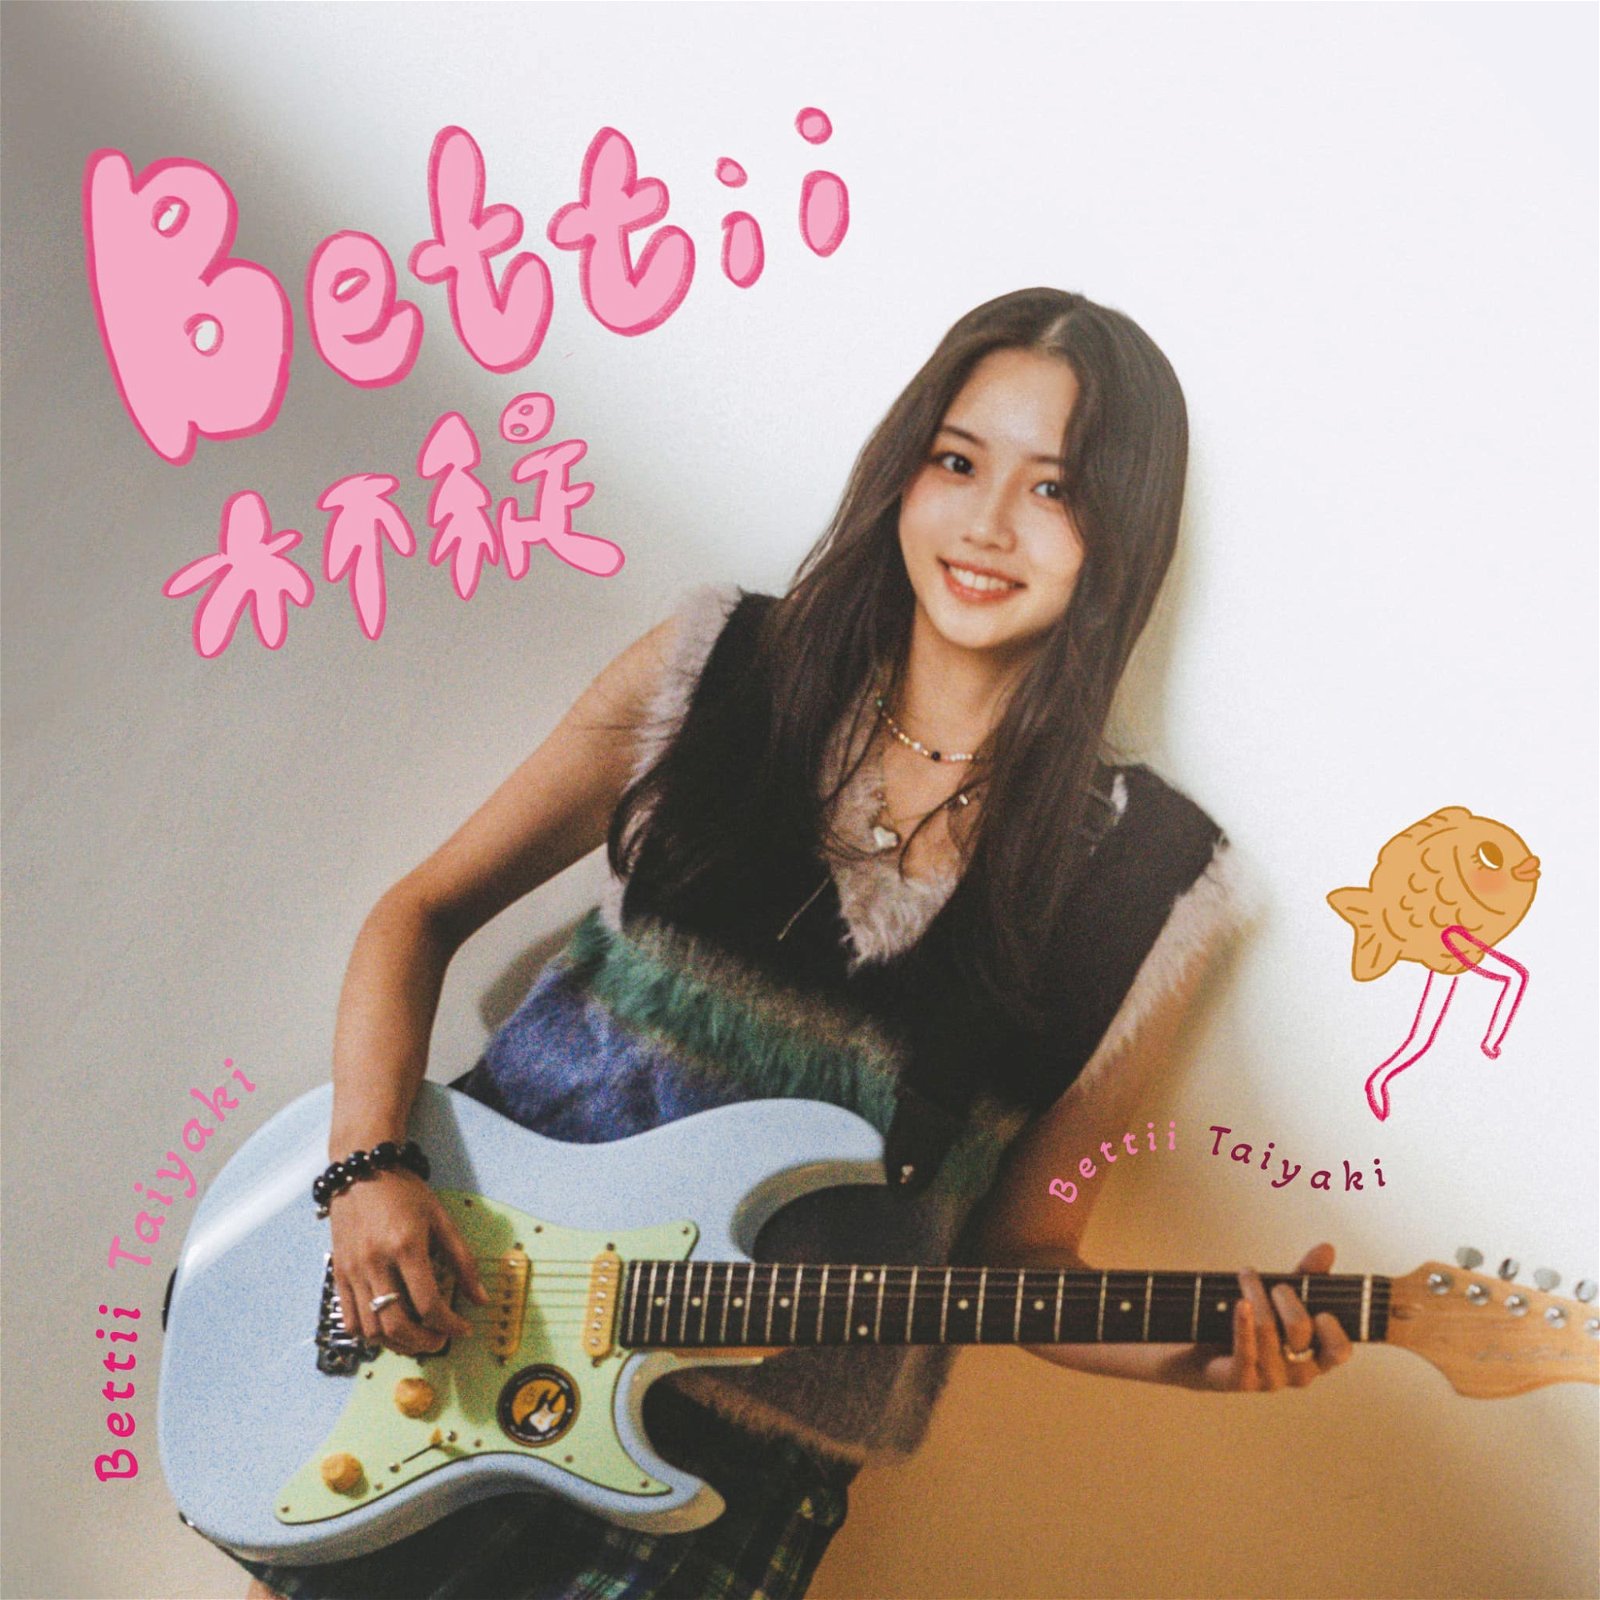 Bettii杯缇的新歌有大马音乐人李志清护航，提携她的也是大马的著名经纪人。